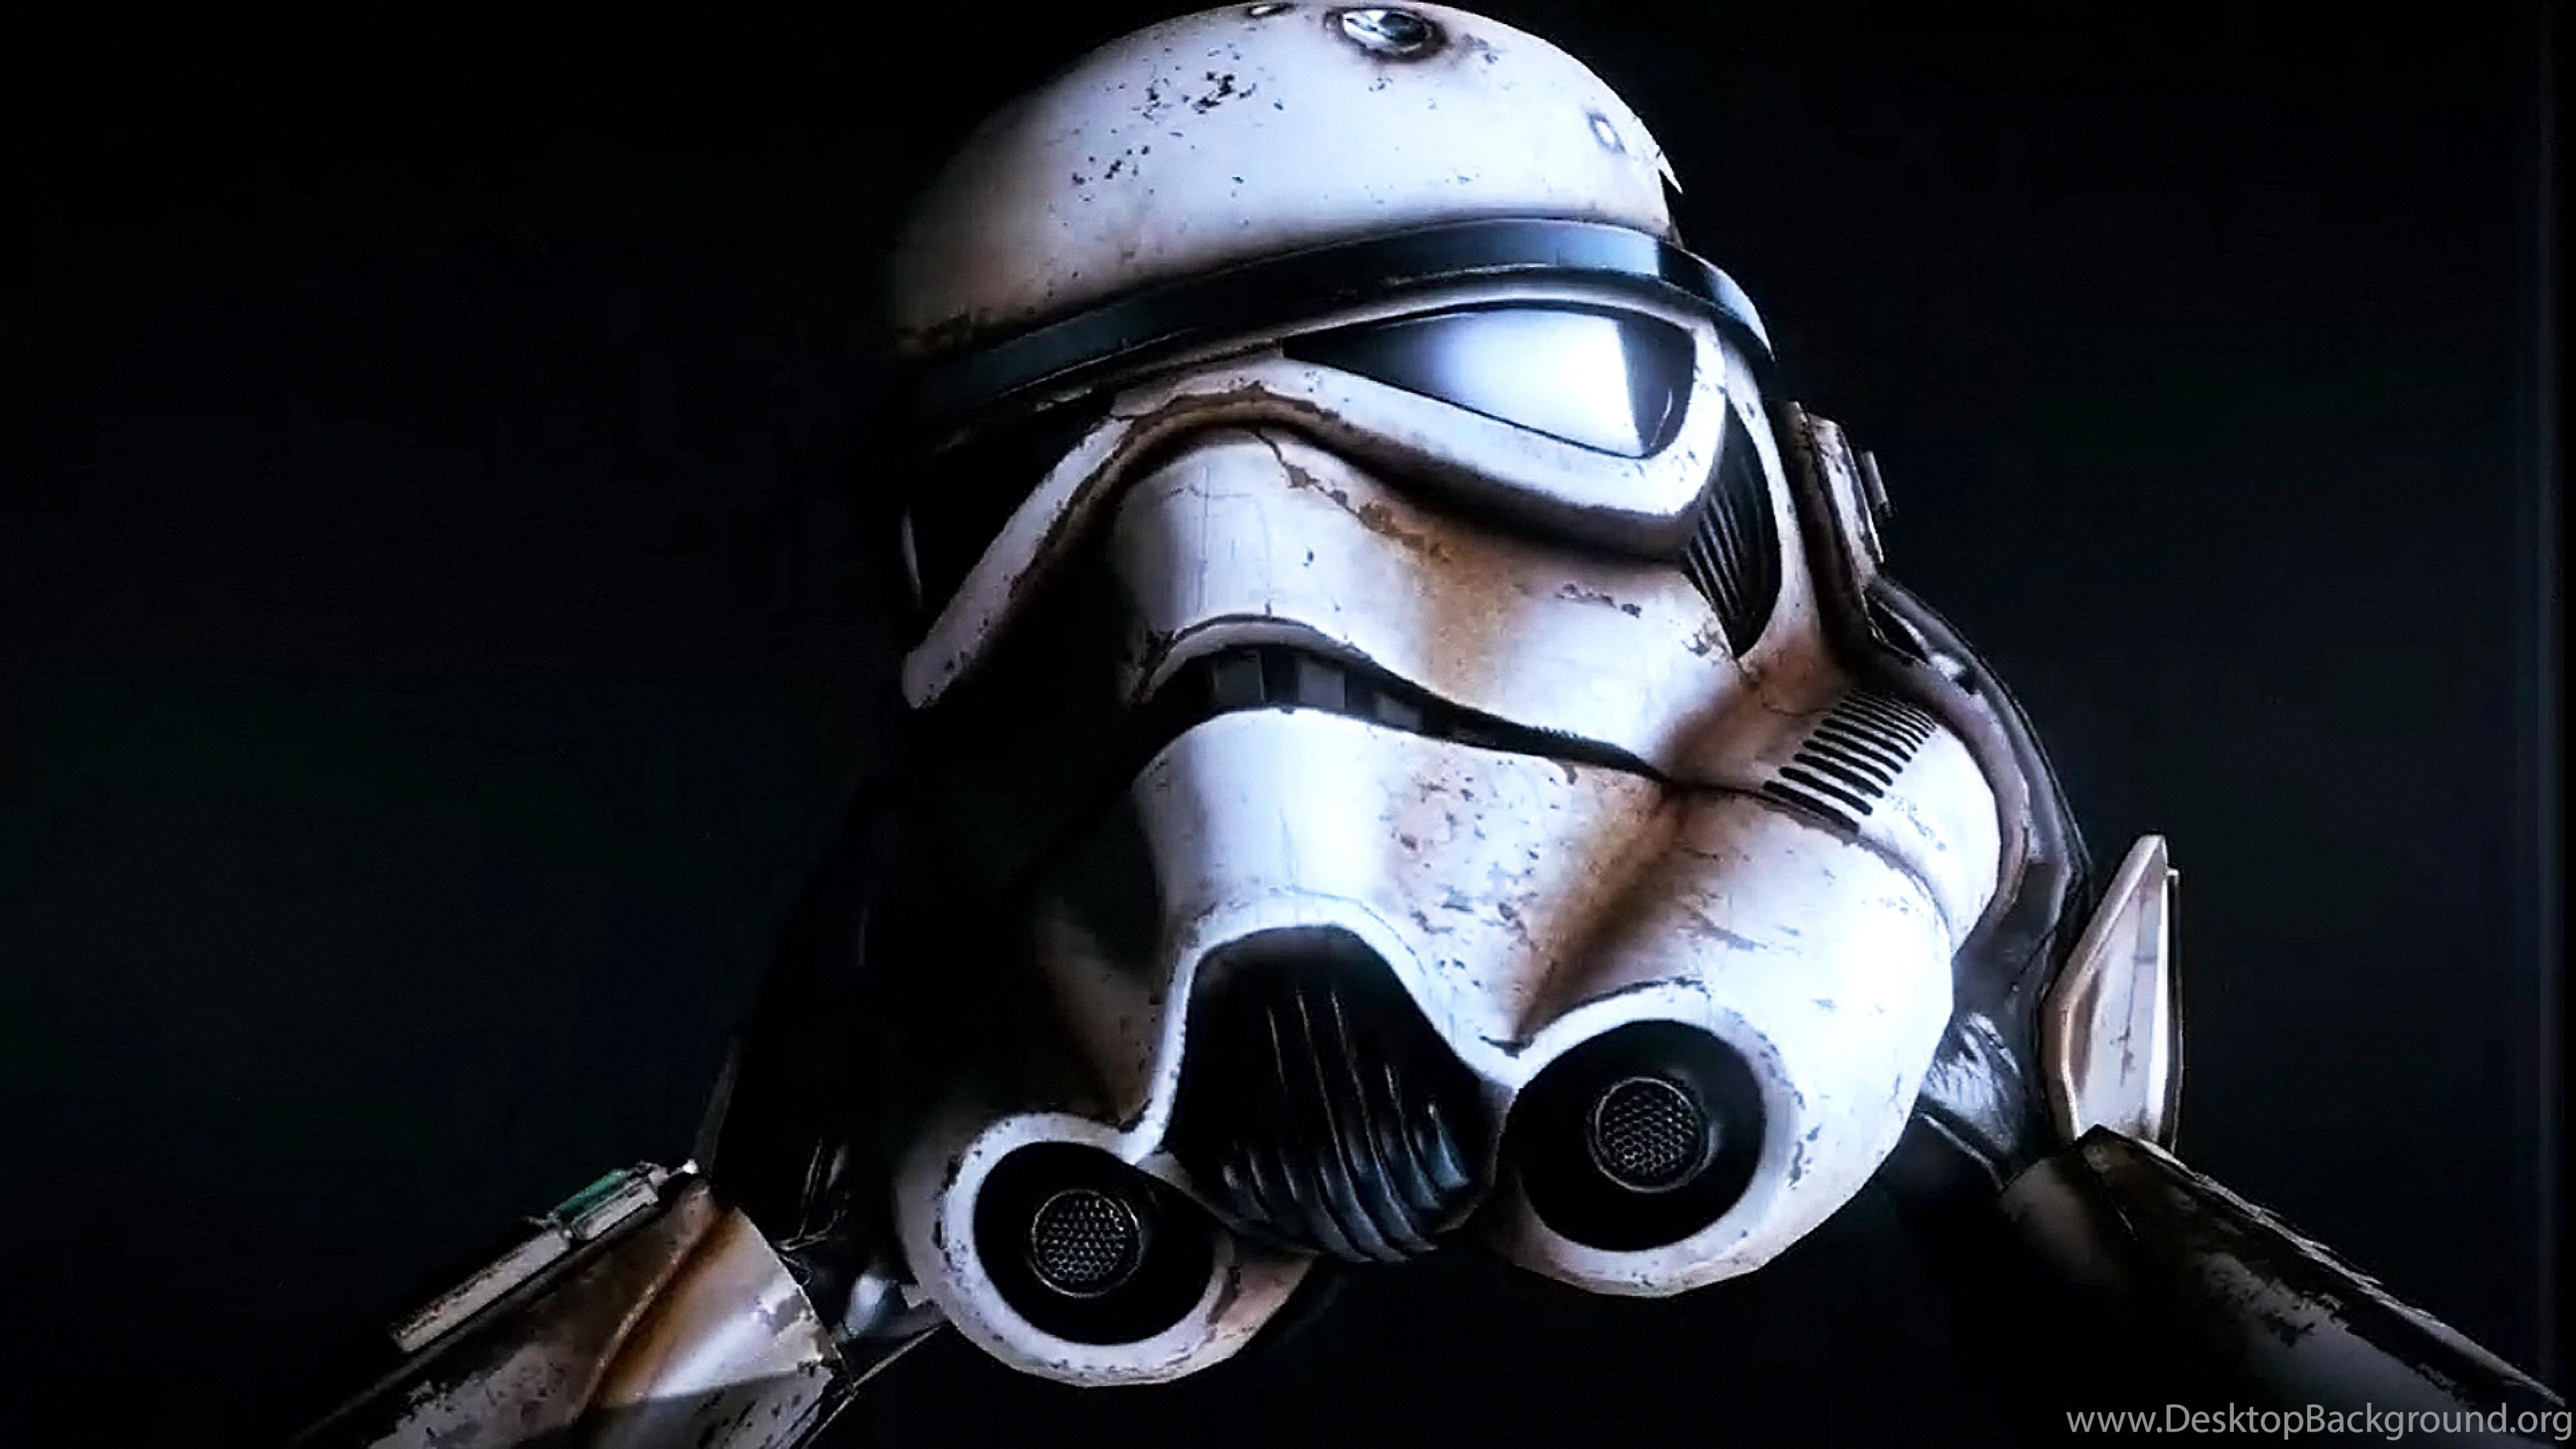 stormtrooper wallpaper hd,helmet,personal protective equipment,fictional character,space,action figure